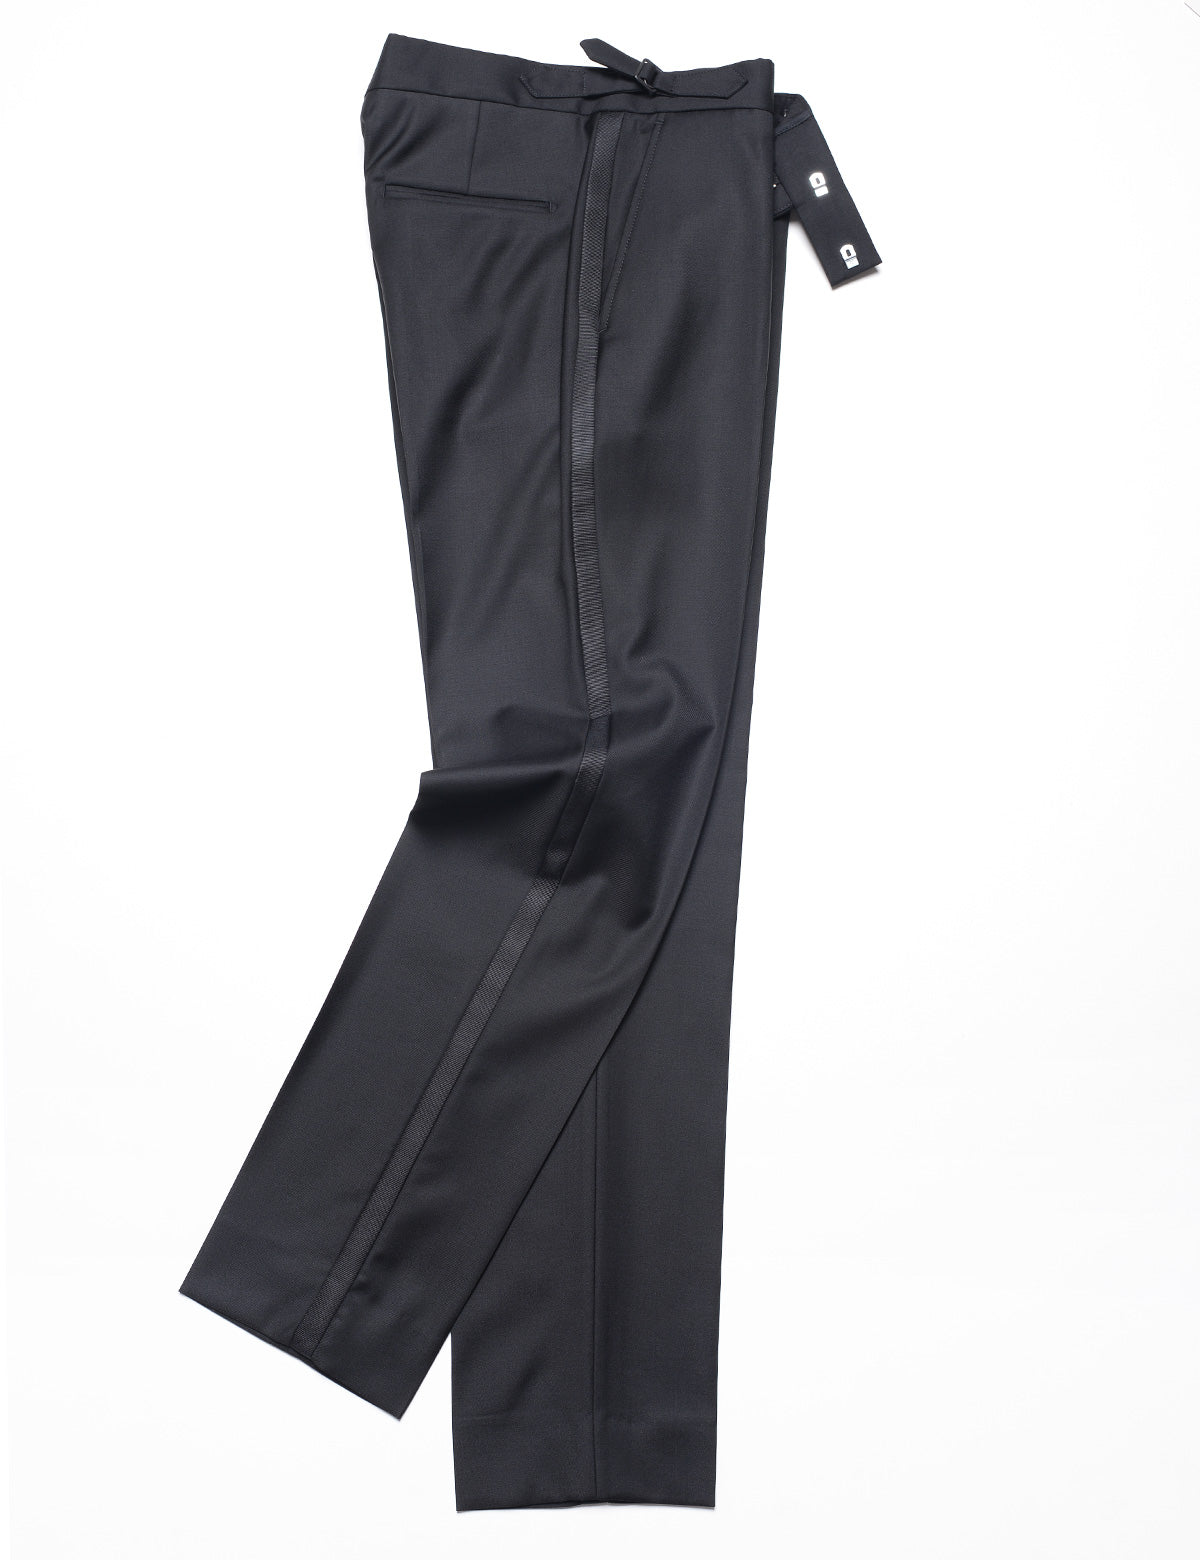 Brooklyn Tailors BKT50 Tuxedo Trouser in Super 120s Twill - Black with Grosgrain Stripe full length flat shot